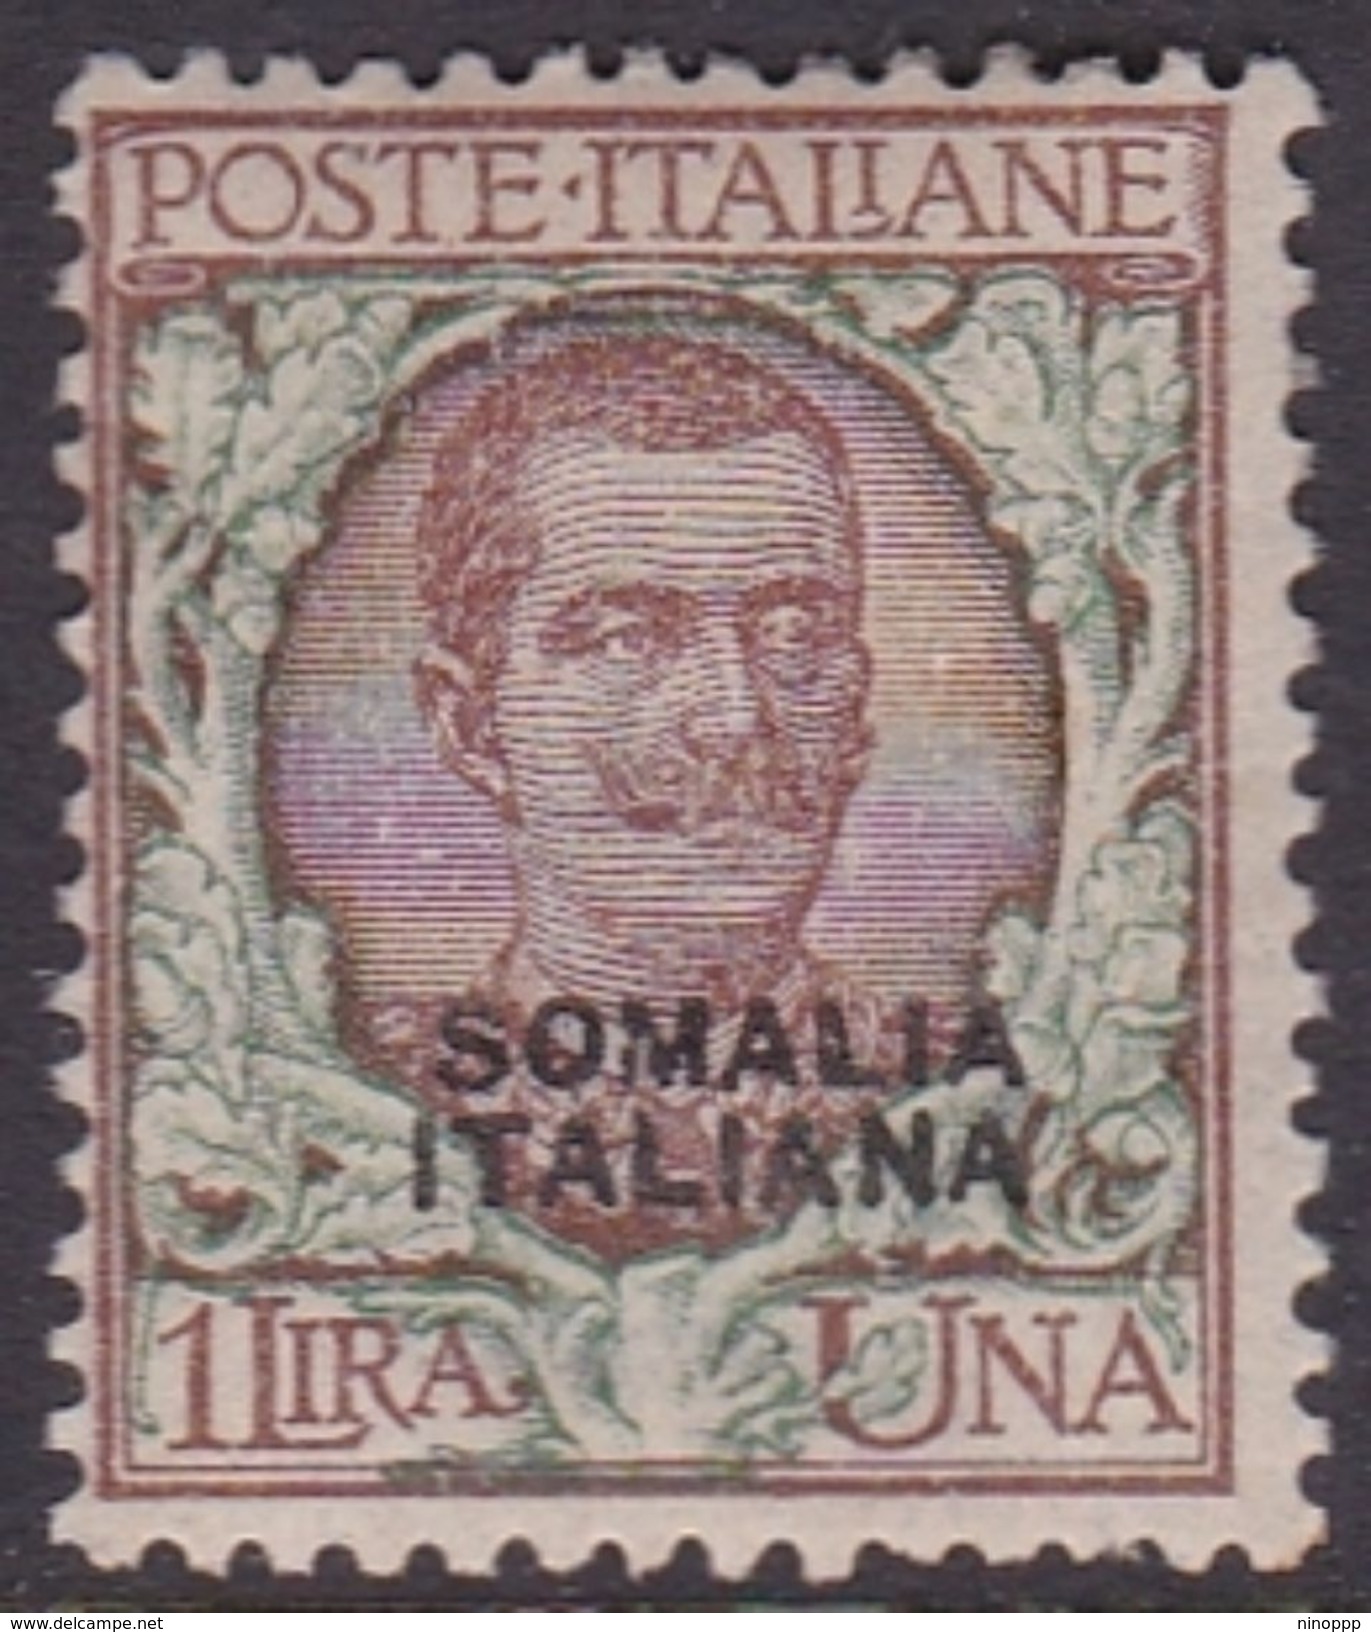 Italy-Colonies And Territories-Somalia S99 1926 Italian Stamps Overprinted SOMALIA ITALIANA,1 Lira Brown And Green, MH - Somalia